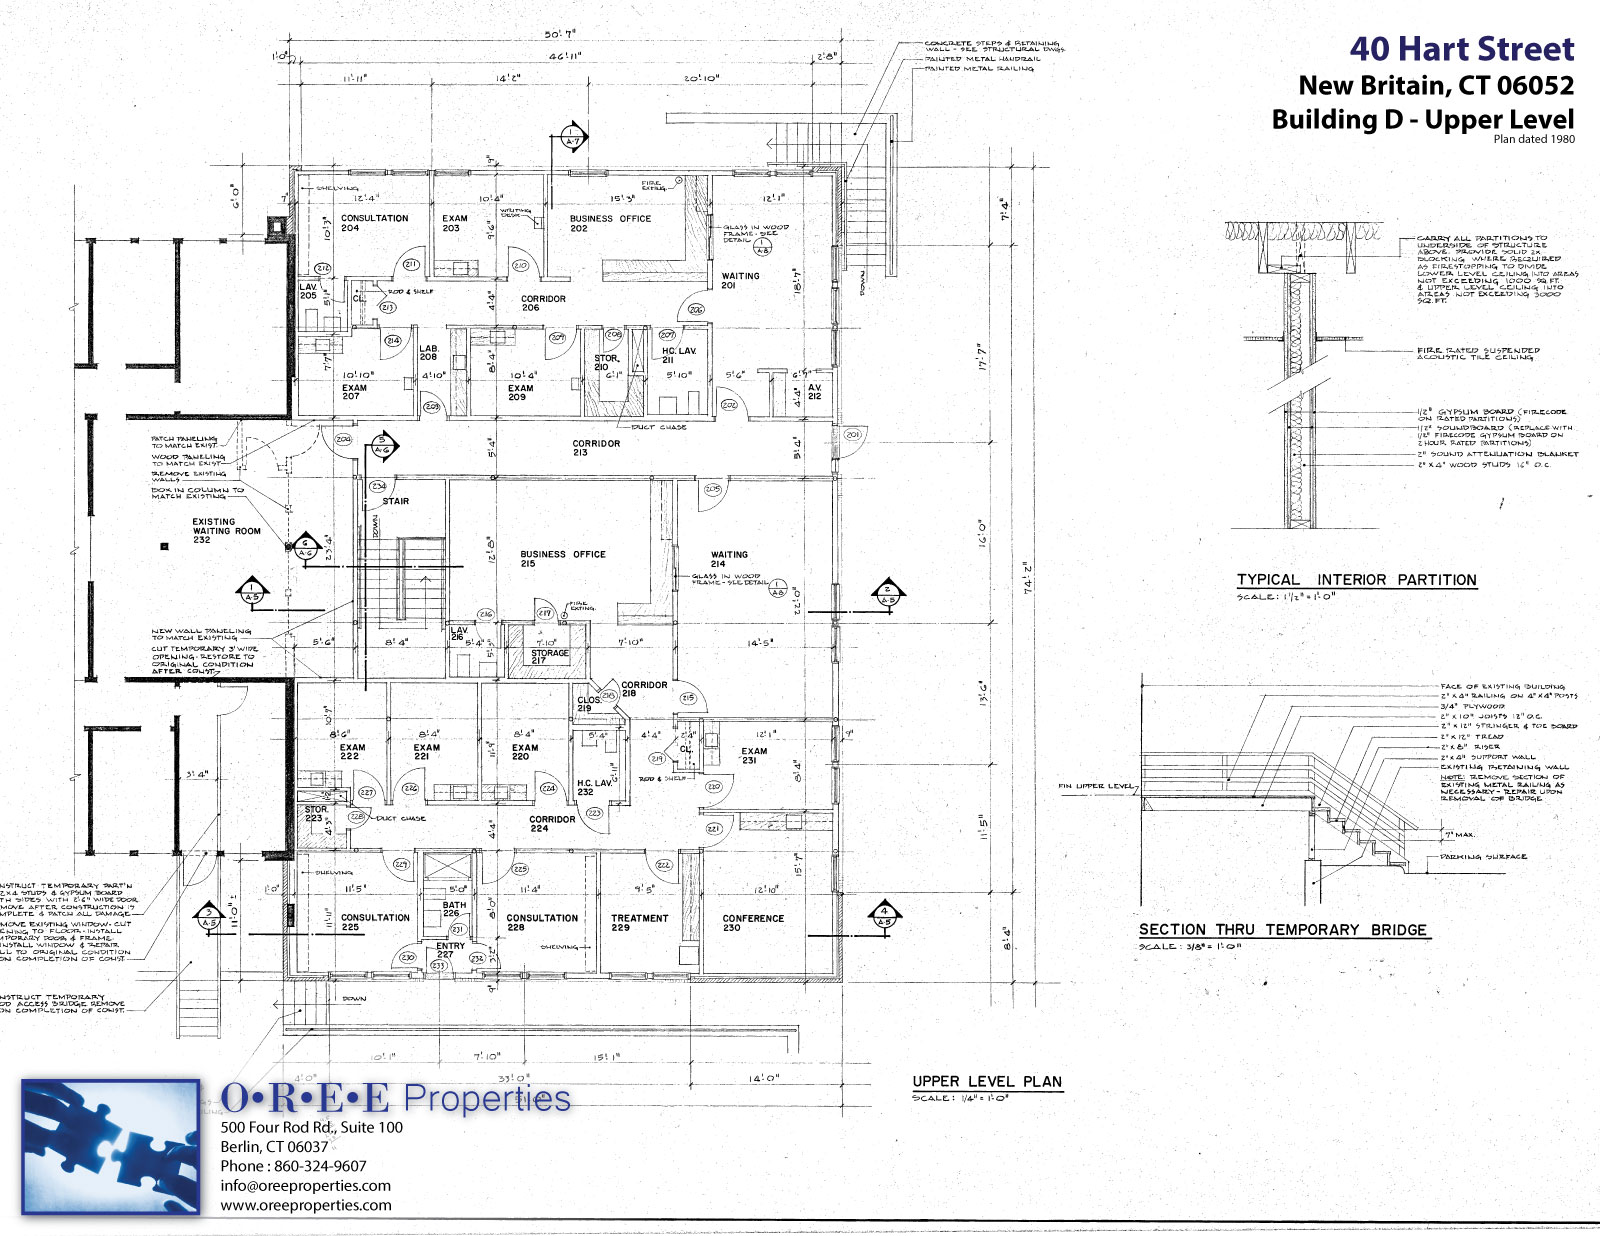 40 Hart St., New Britain, Building D - Upper Level Floor Plan